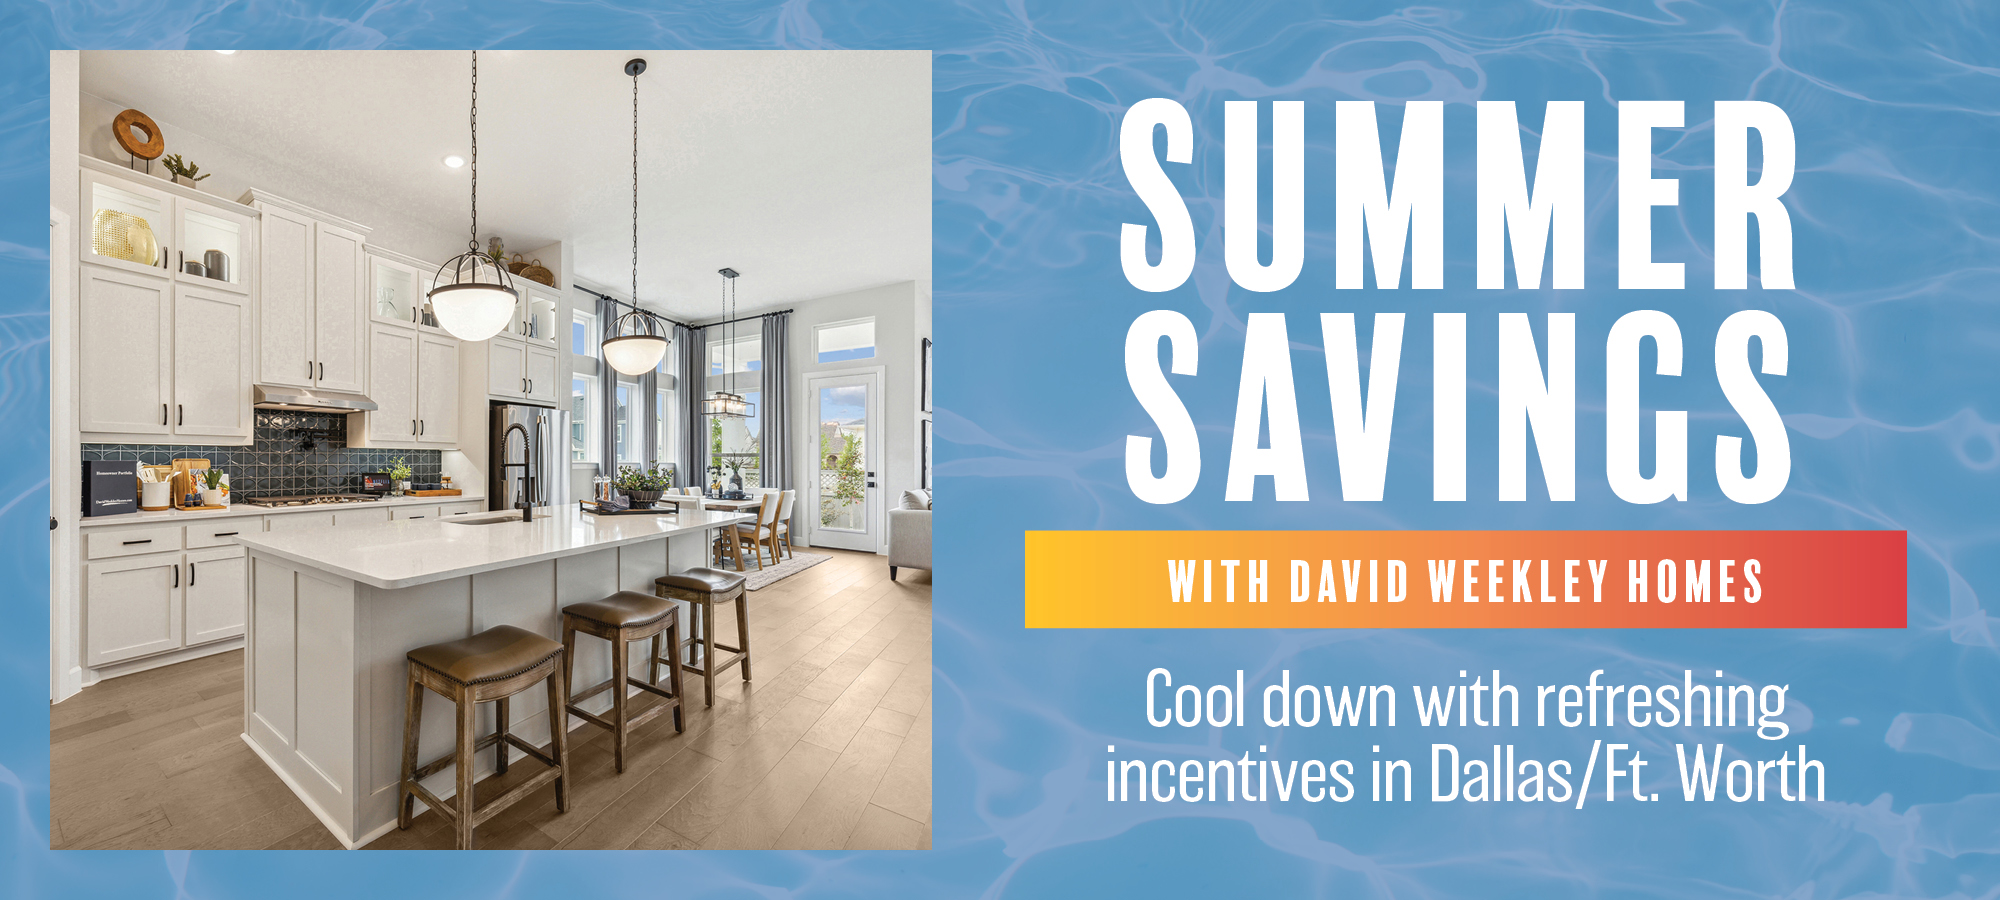 Summer Savings with David Weekley Homes in Dallas/Ft. Worth